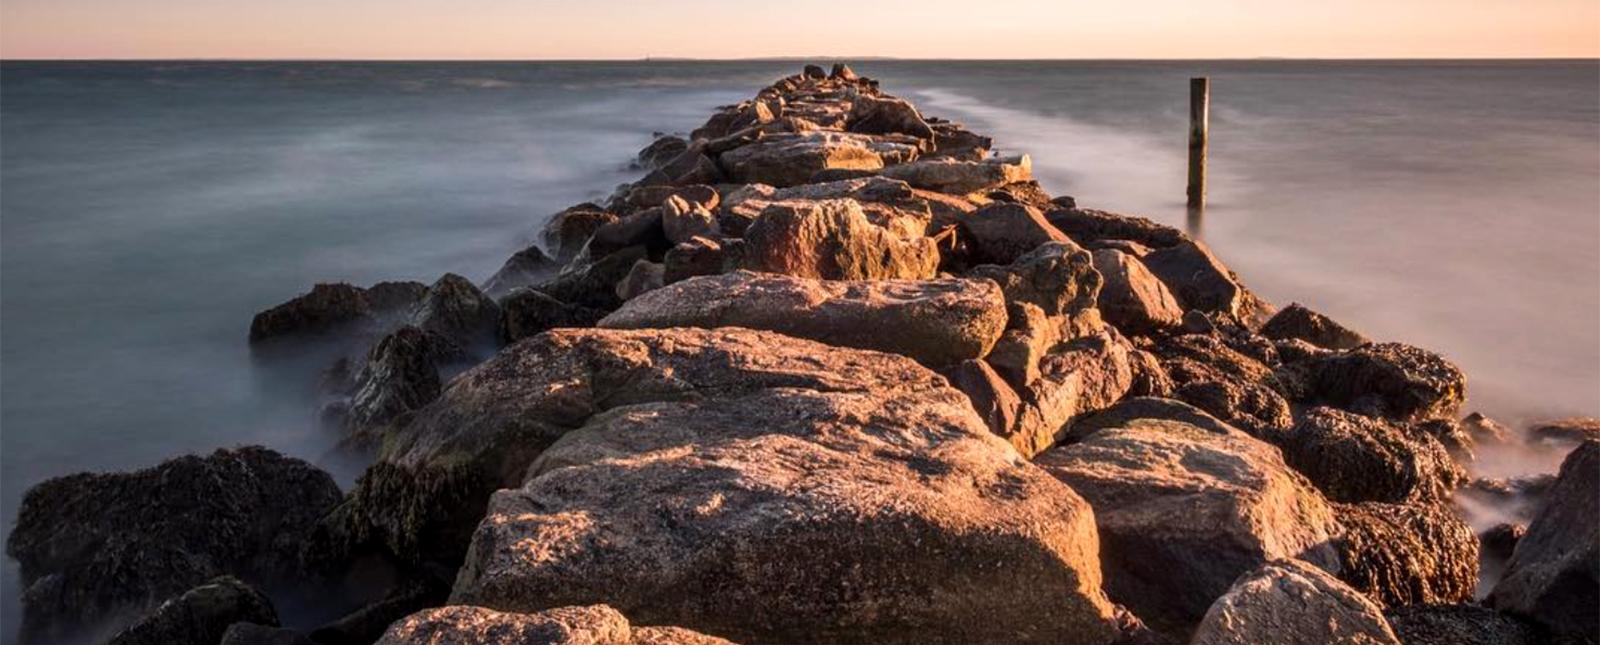 Rocks into the ocean (Instagram@nora_kaszuba)